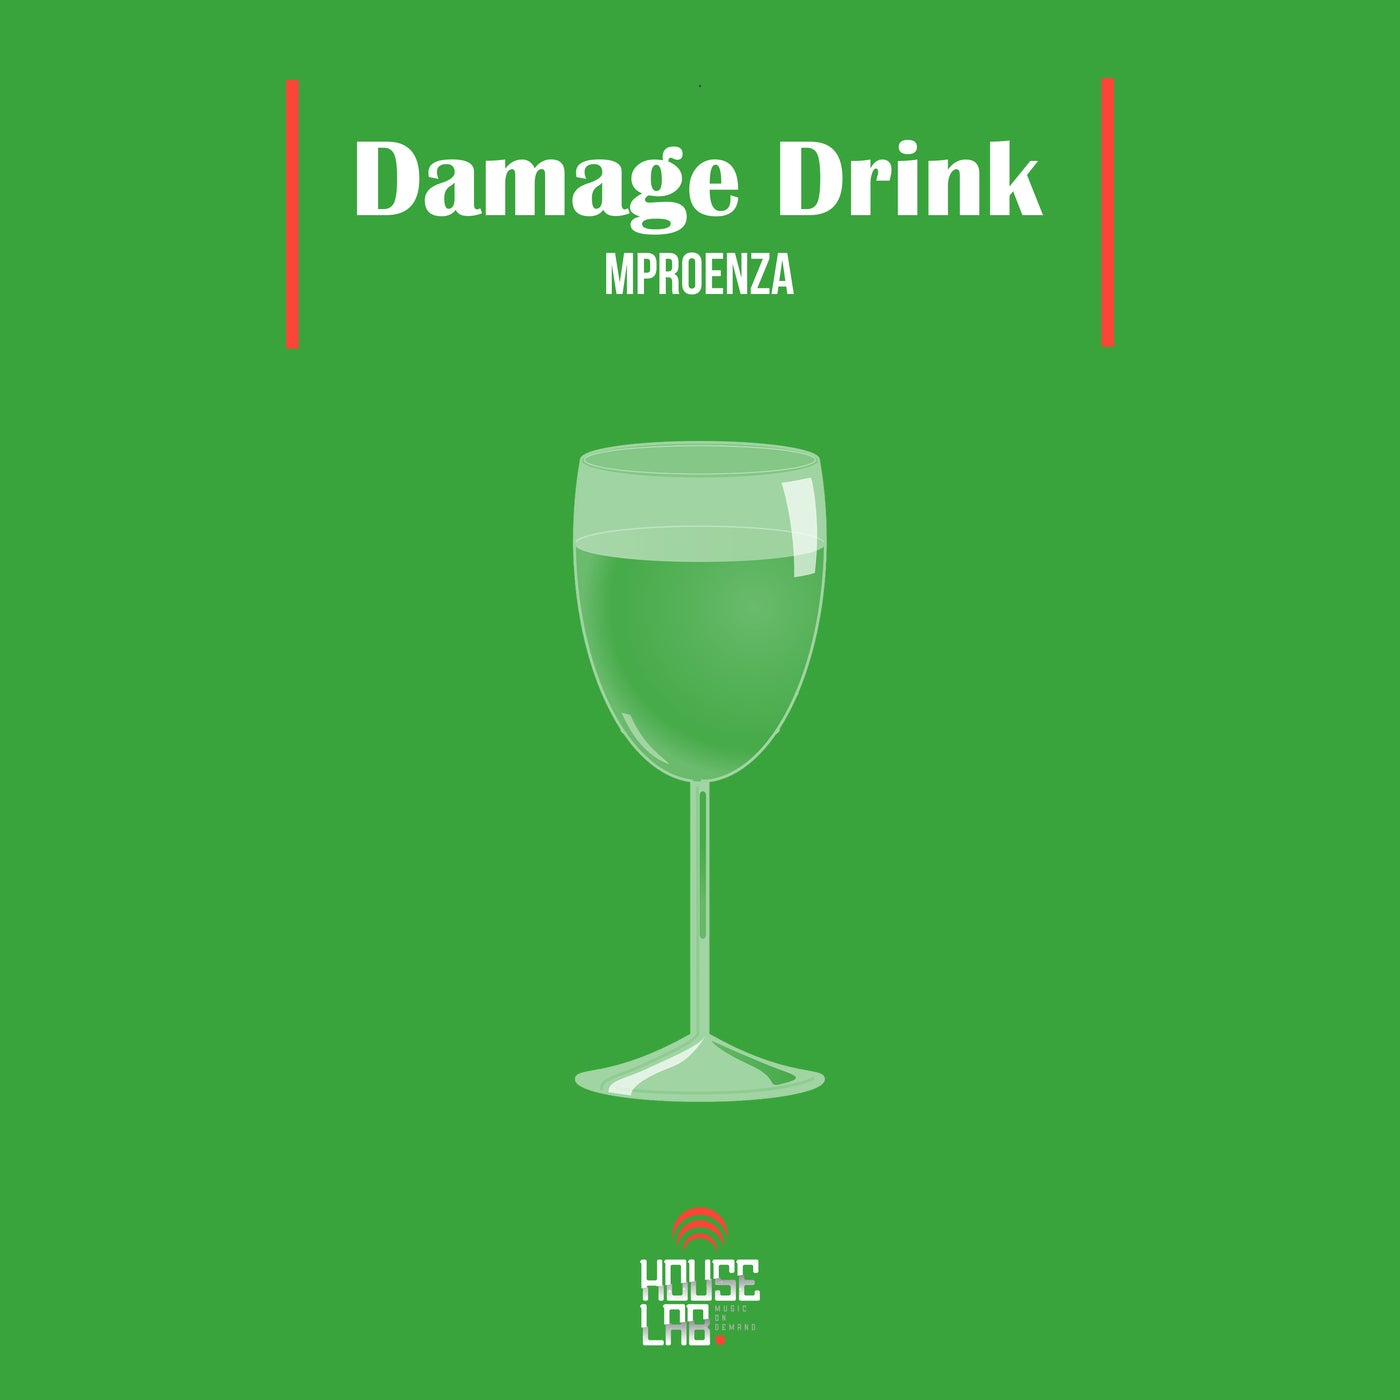 Damage Drink